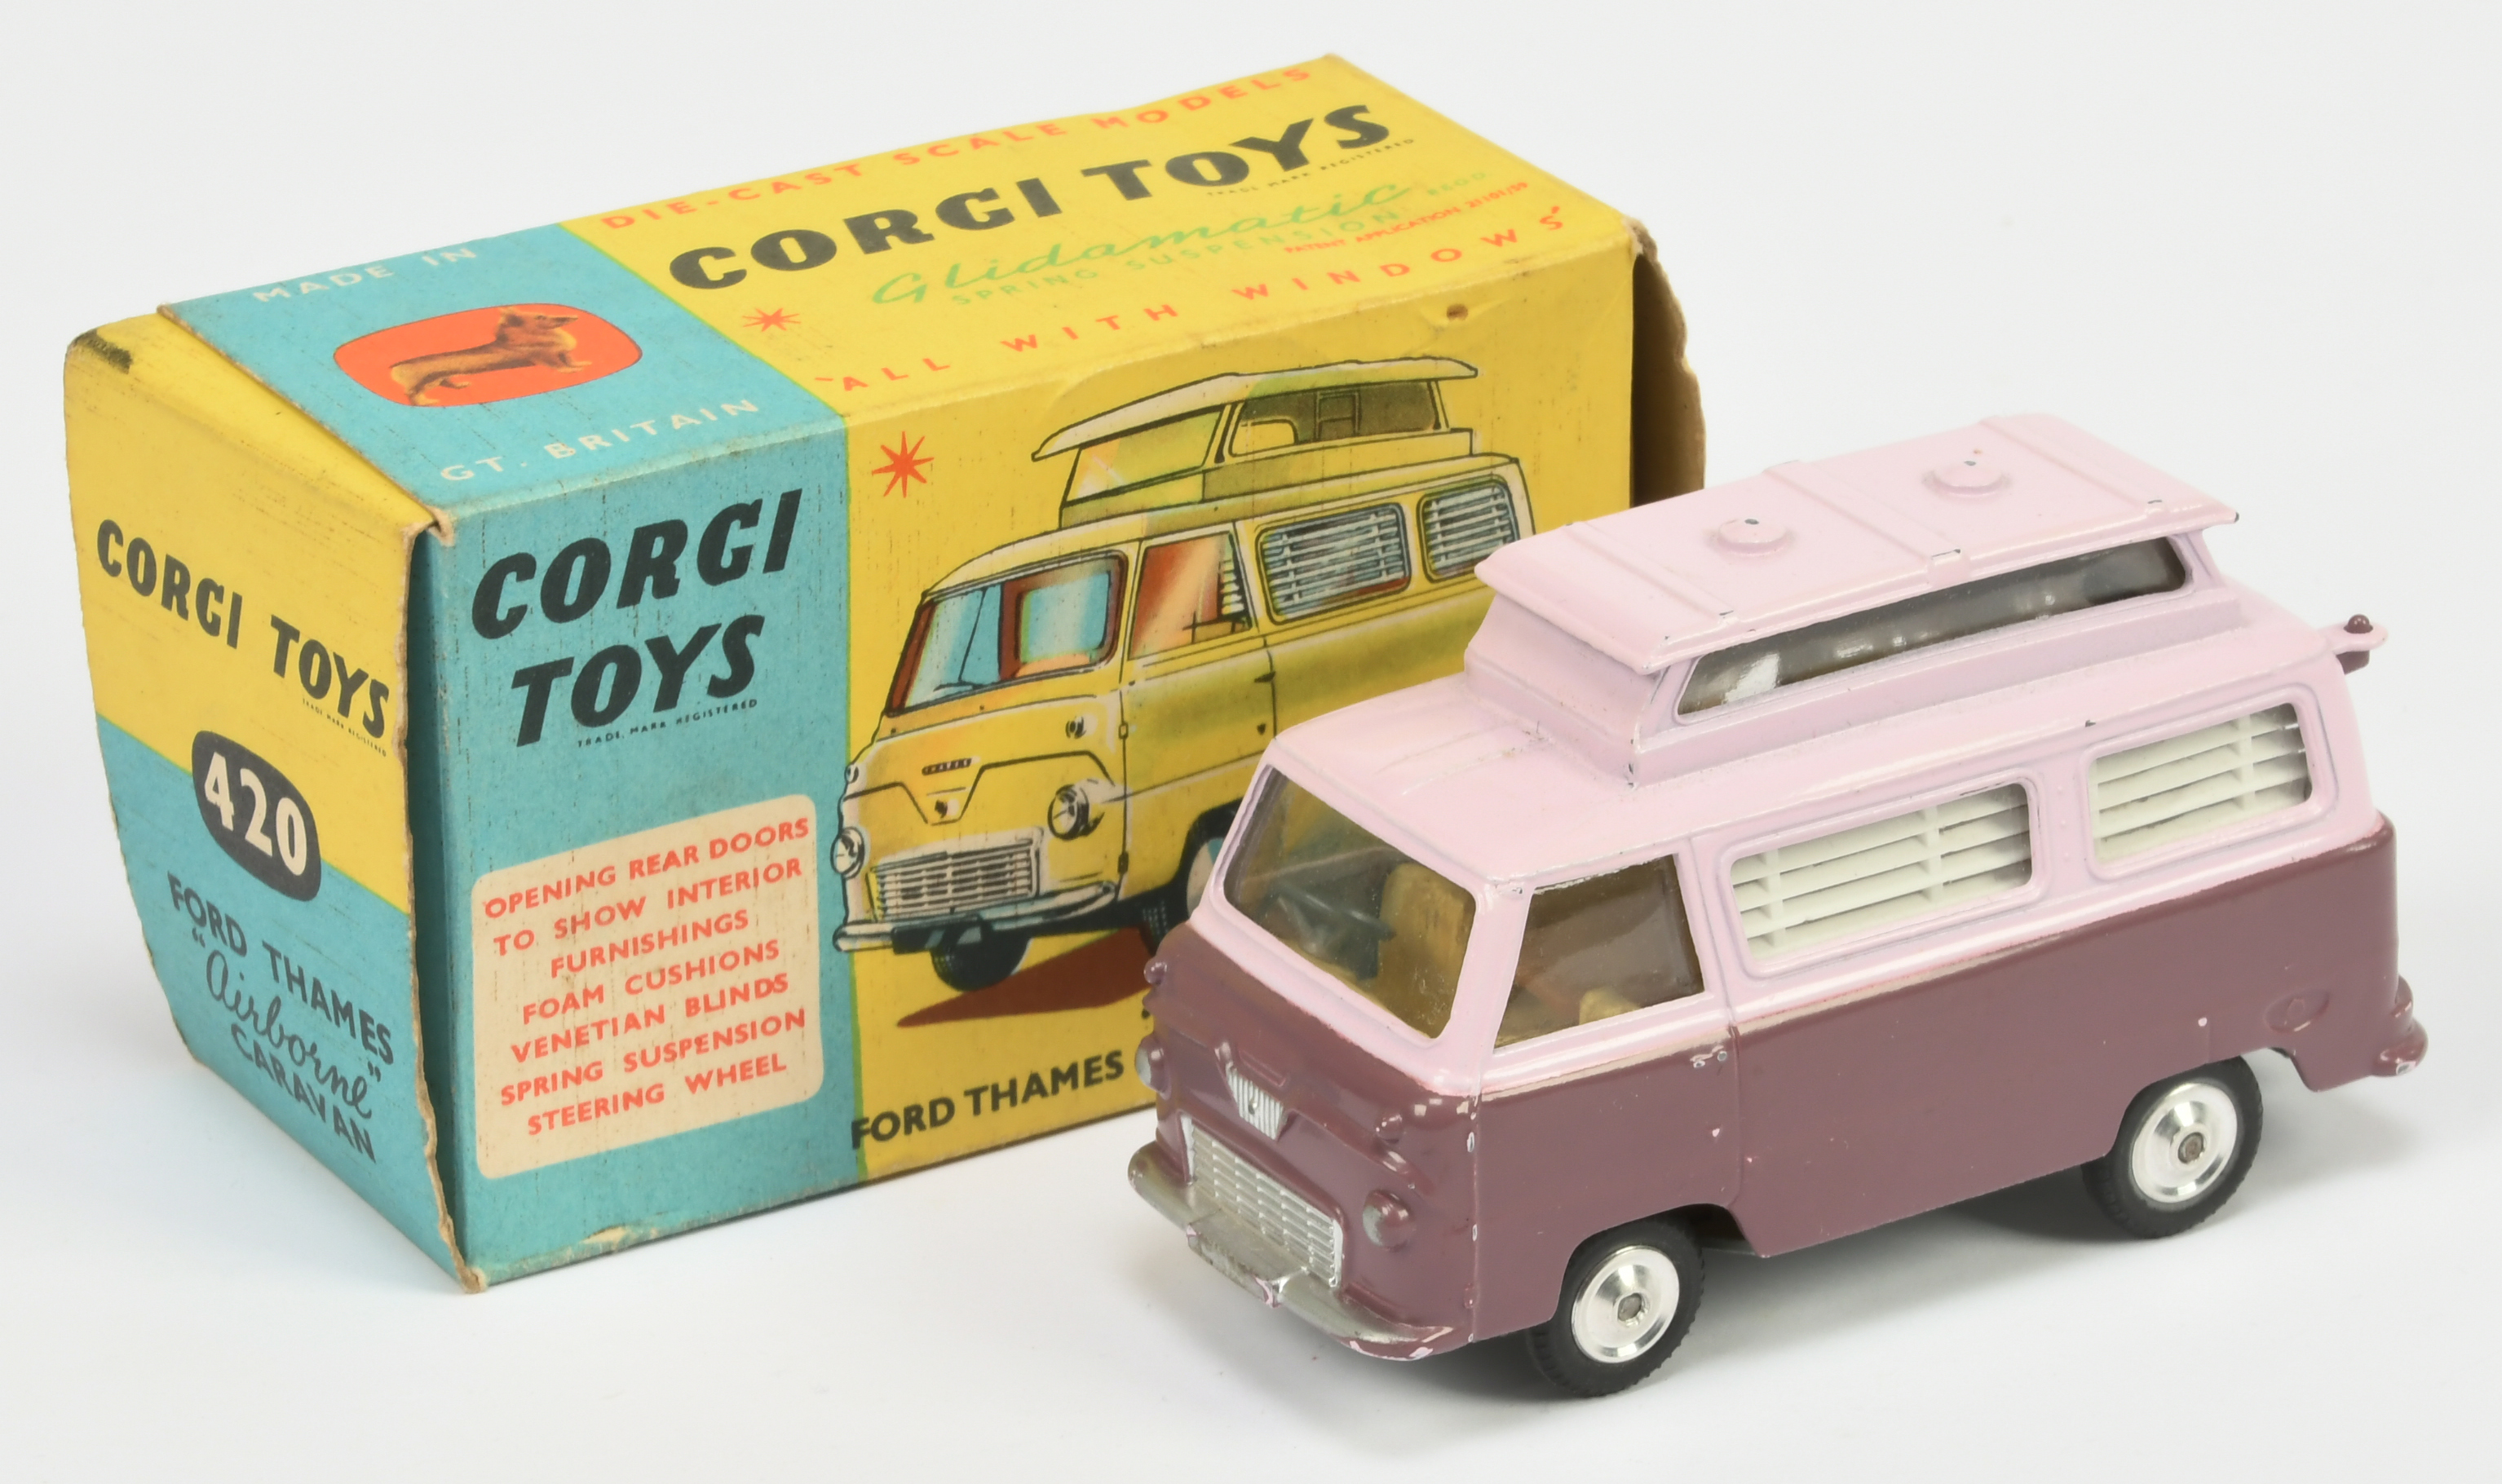 Corgi Toys 420 Ford Thames  Airborne Caravan - Two-Tone Mauve and deep pink, silver trim and spun...